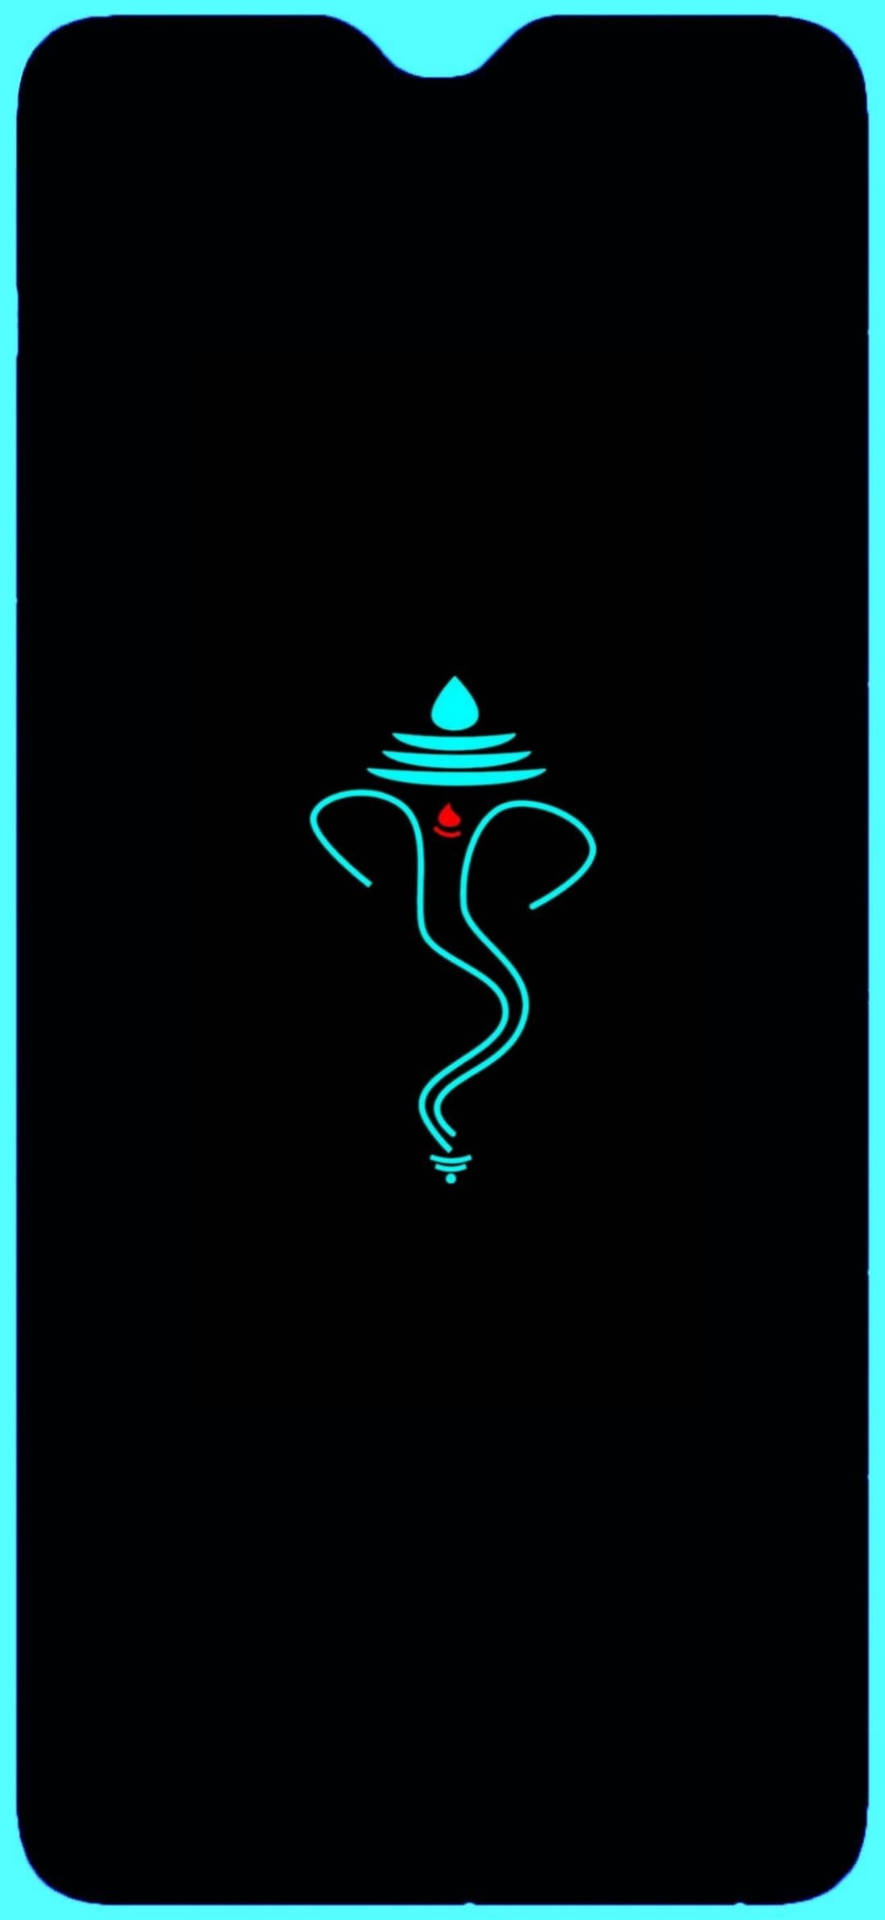 Simple Ganesh IPhone Icon Wallpaper